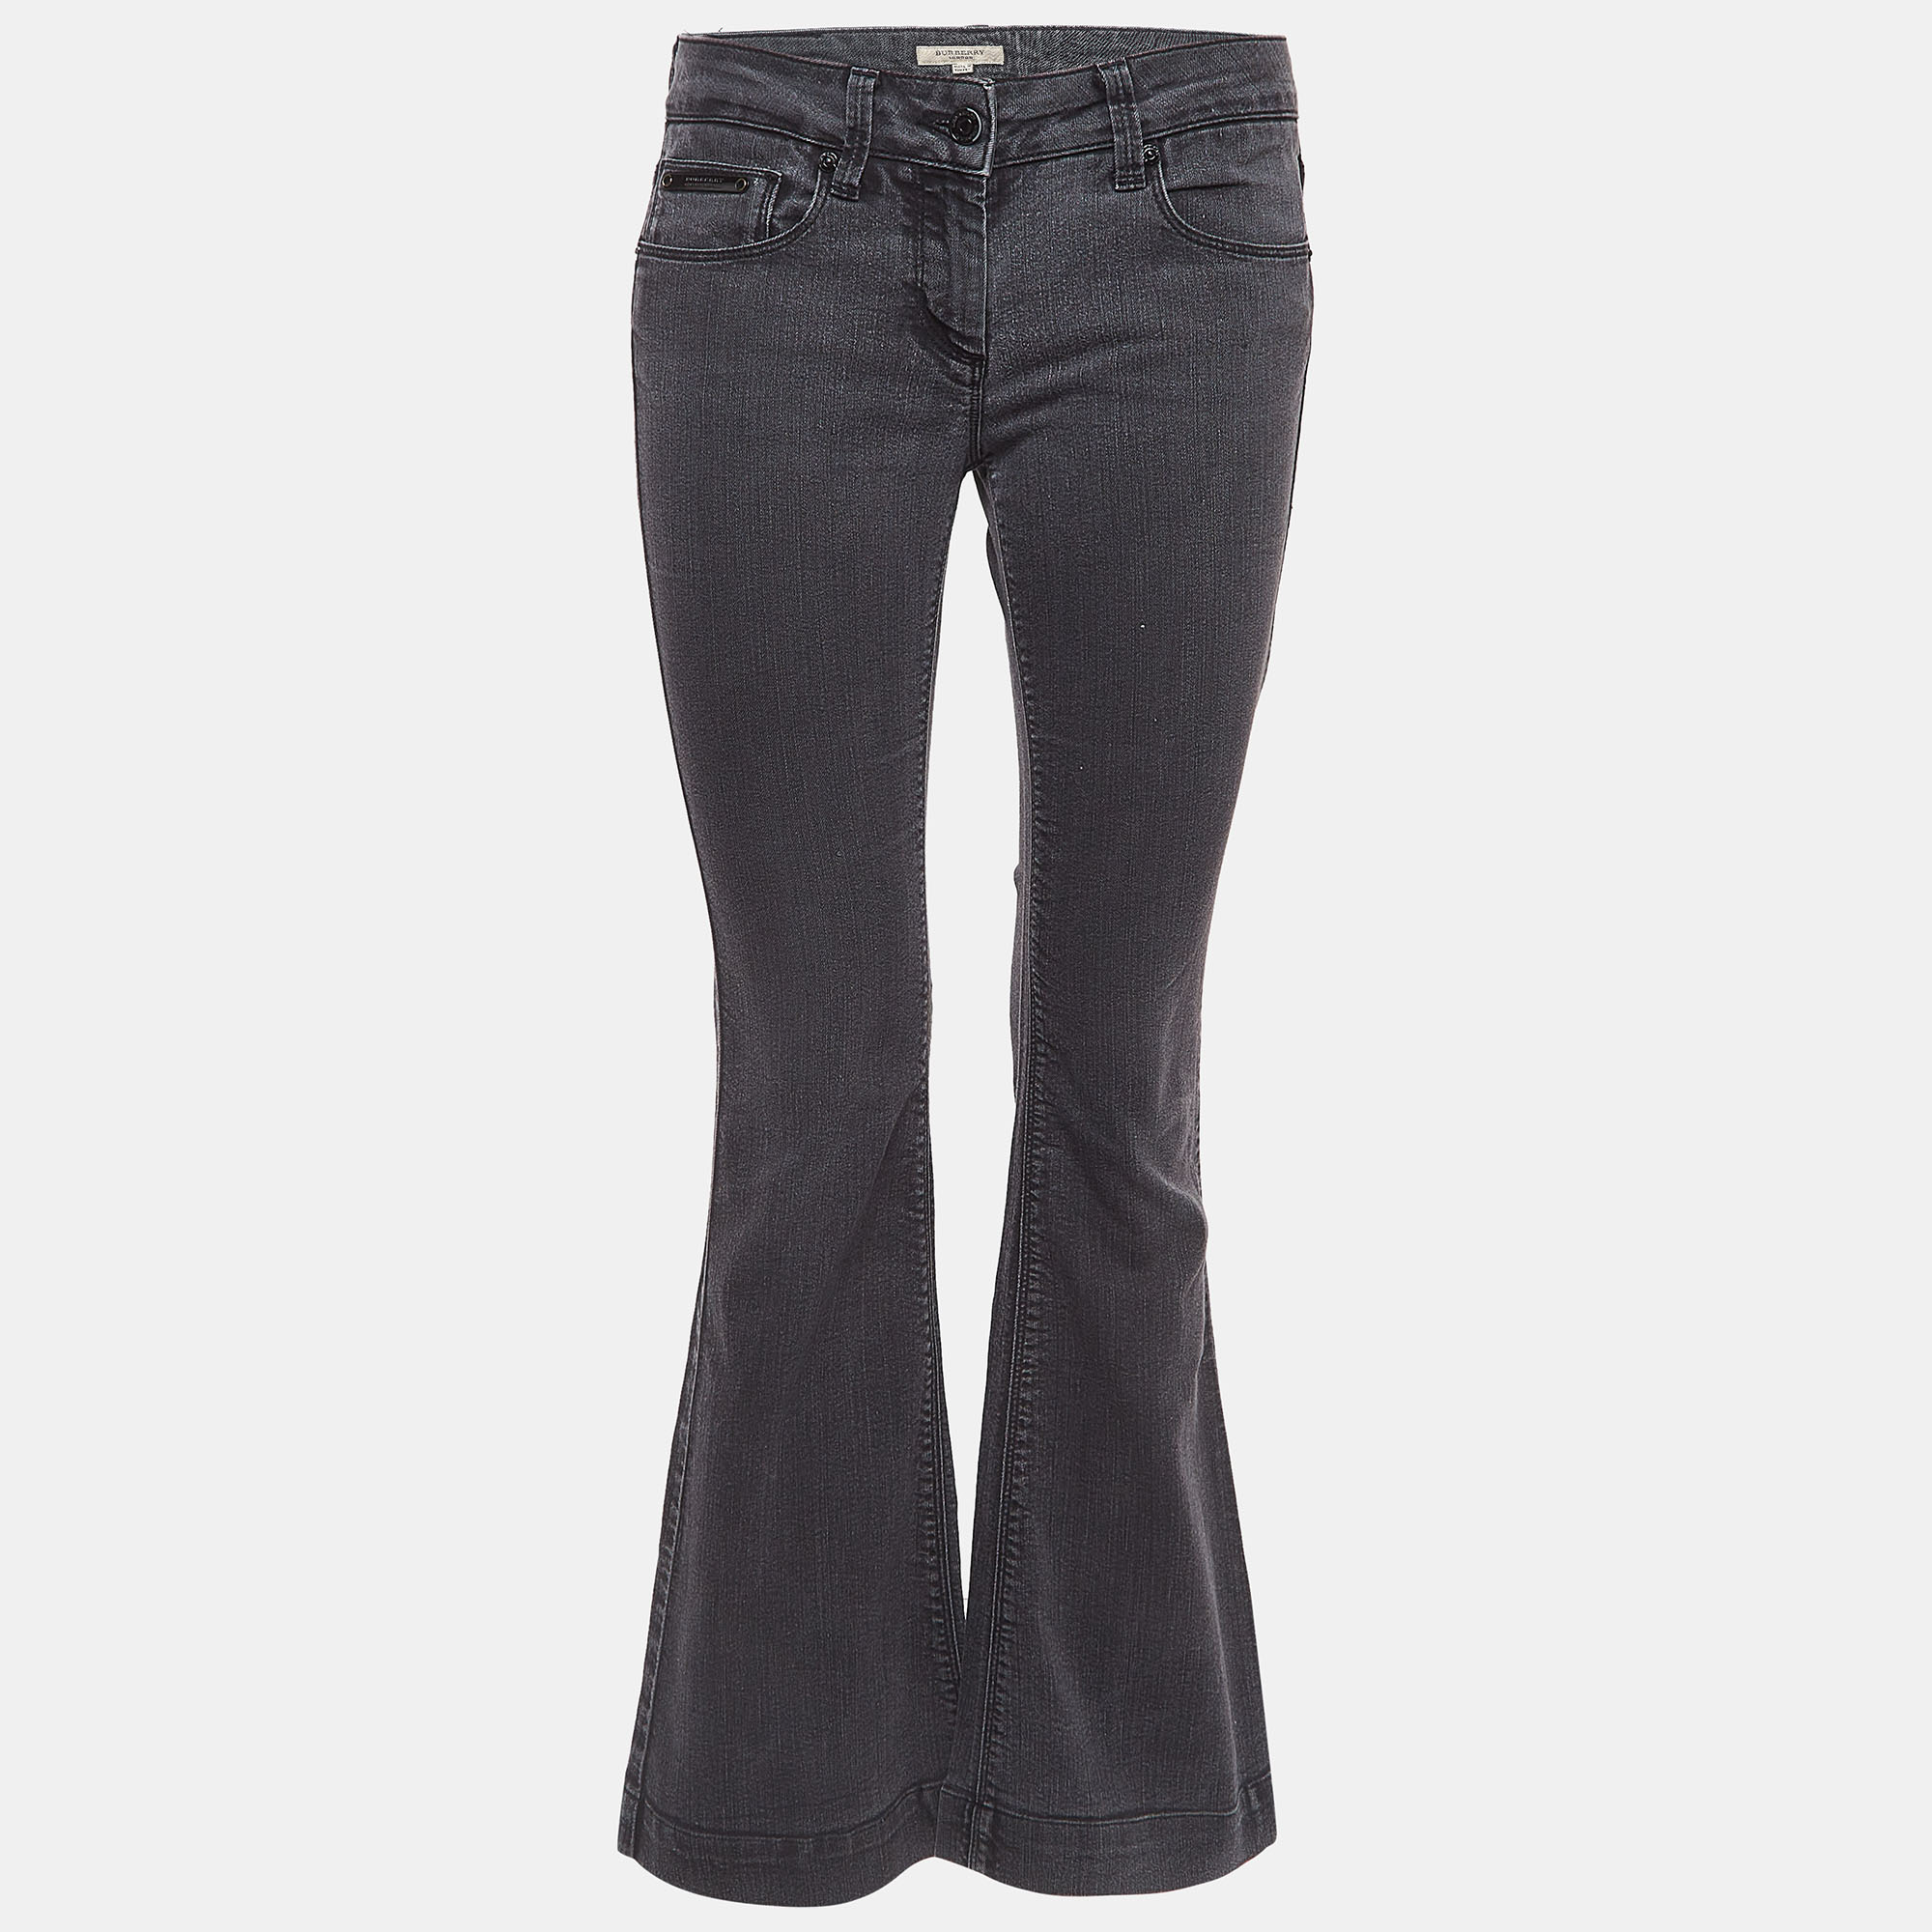 Burberry grey washed denim flared leg jeans m waist 30''